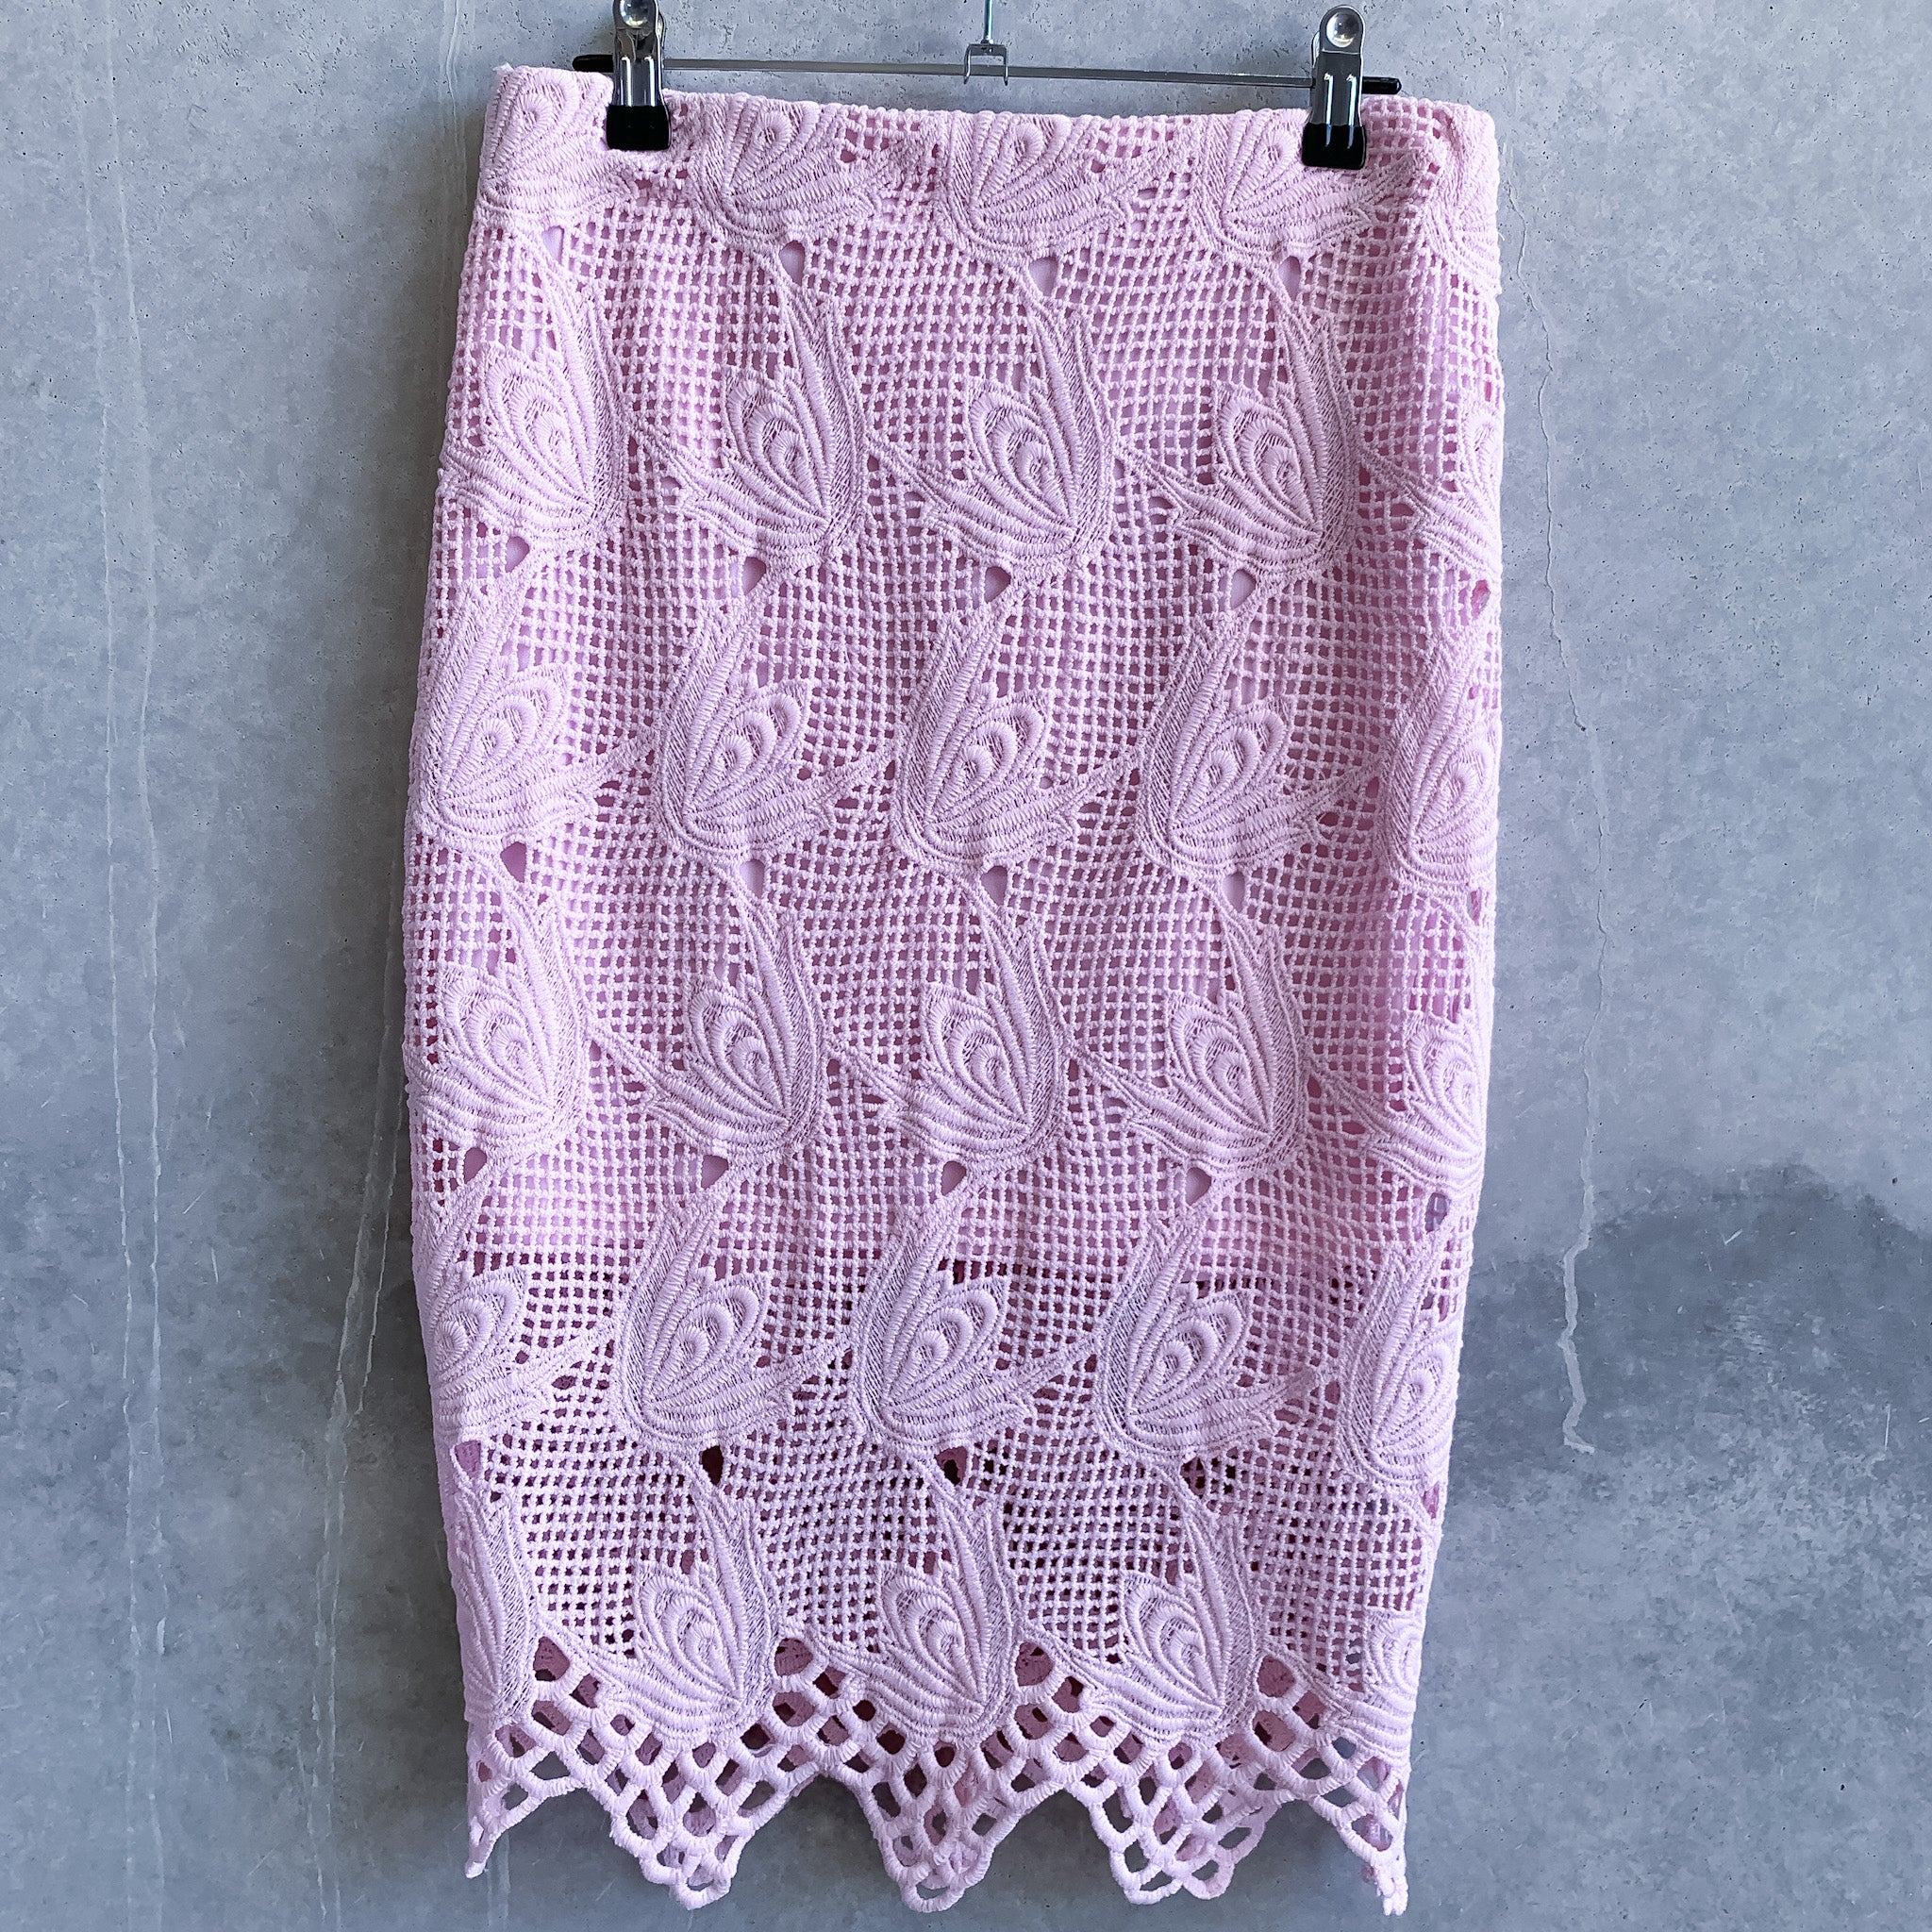 BNWT DOTTI Pink Lace Pencil Skirt - Size 10